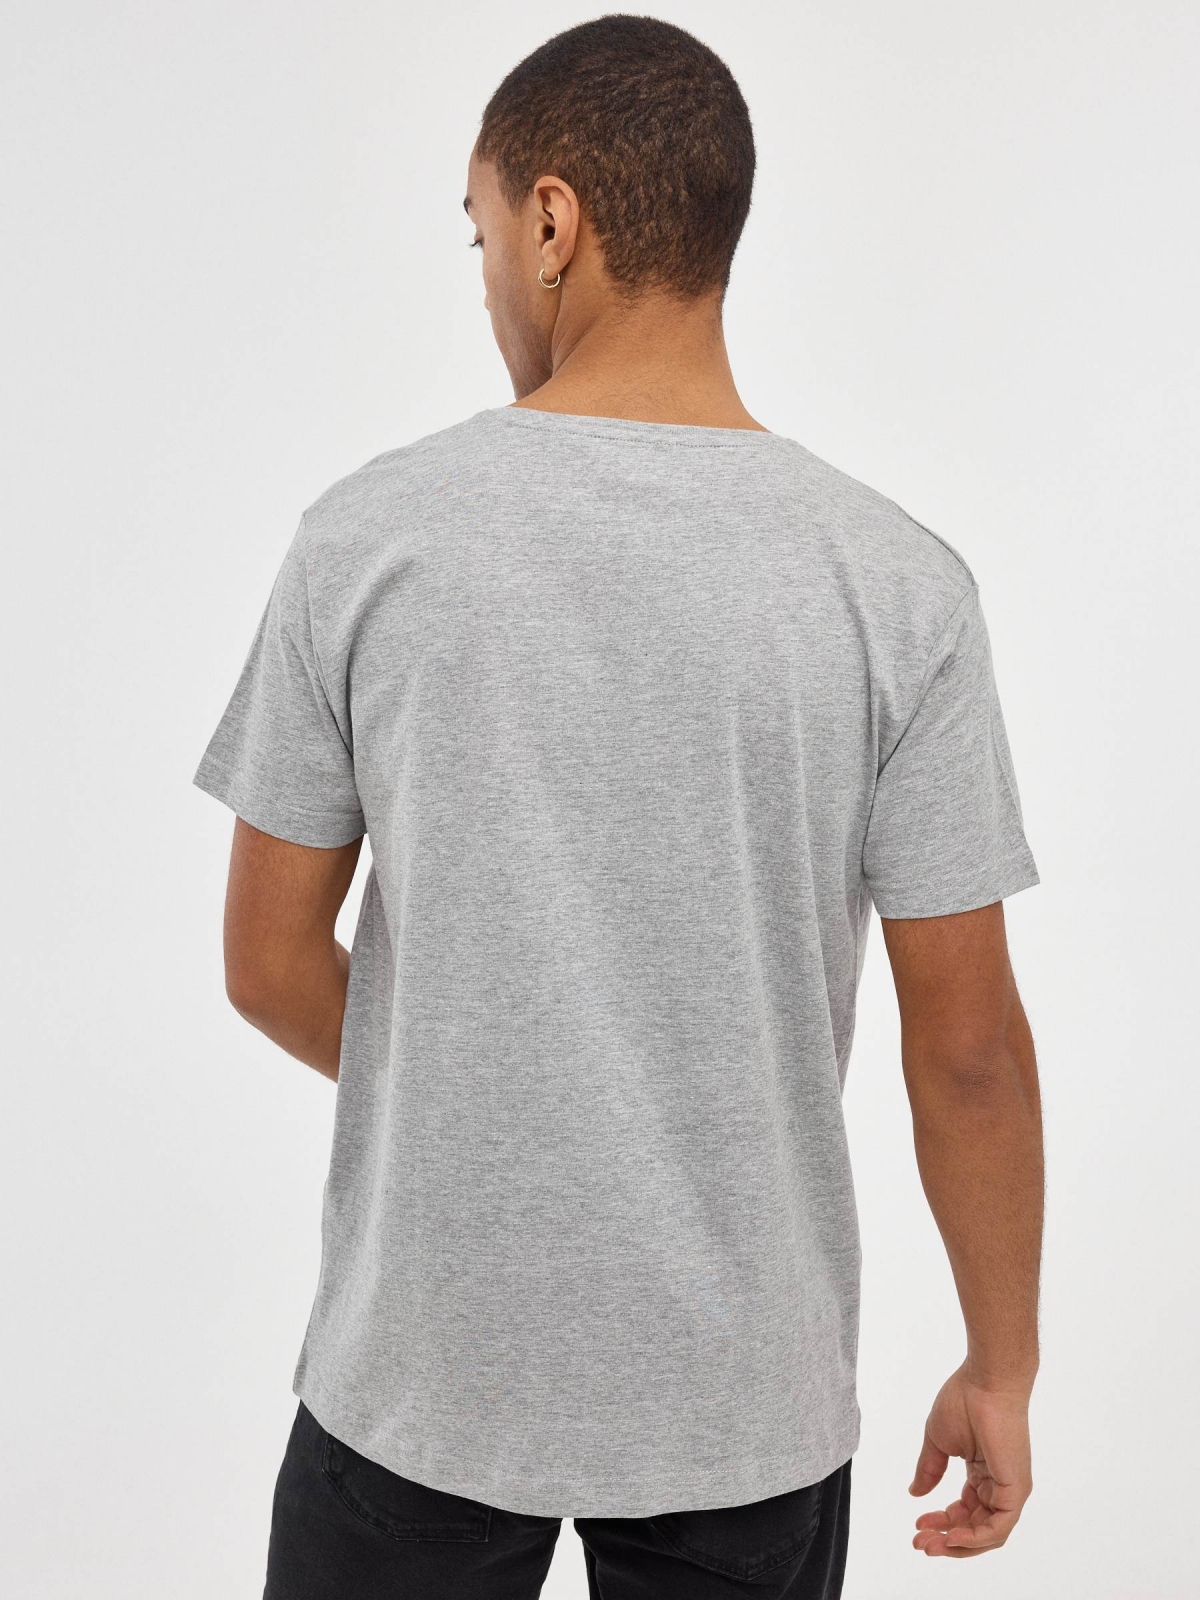 Camiseta básica cuello pico gris vista media trasera